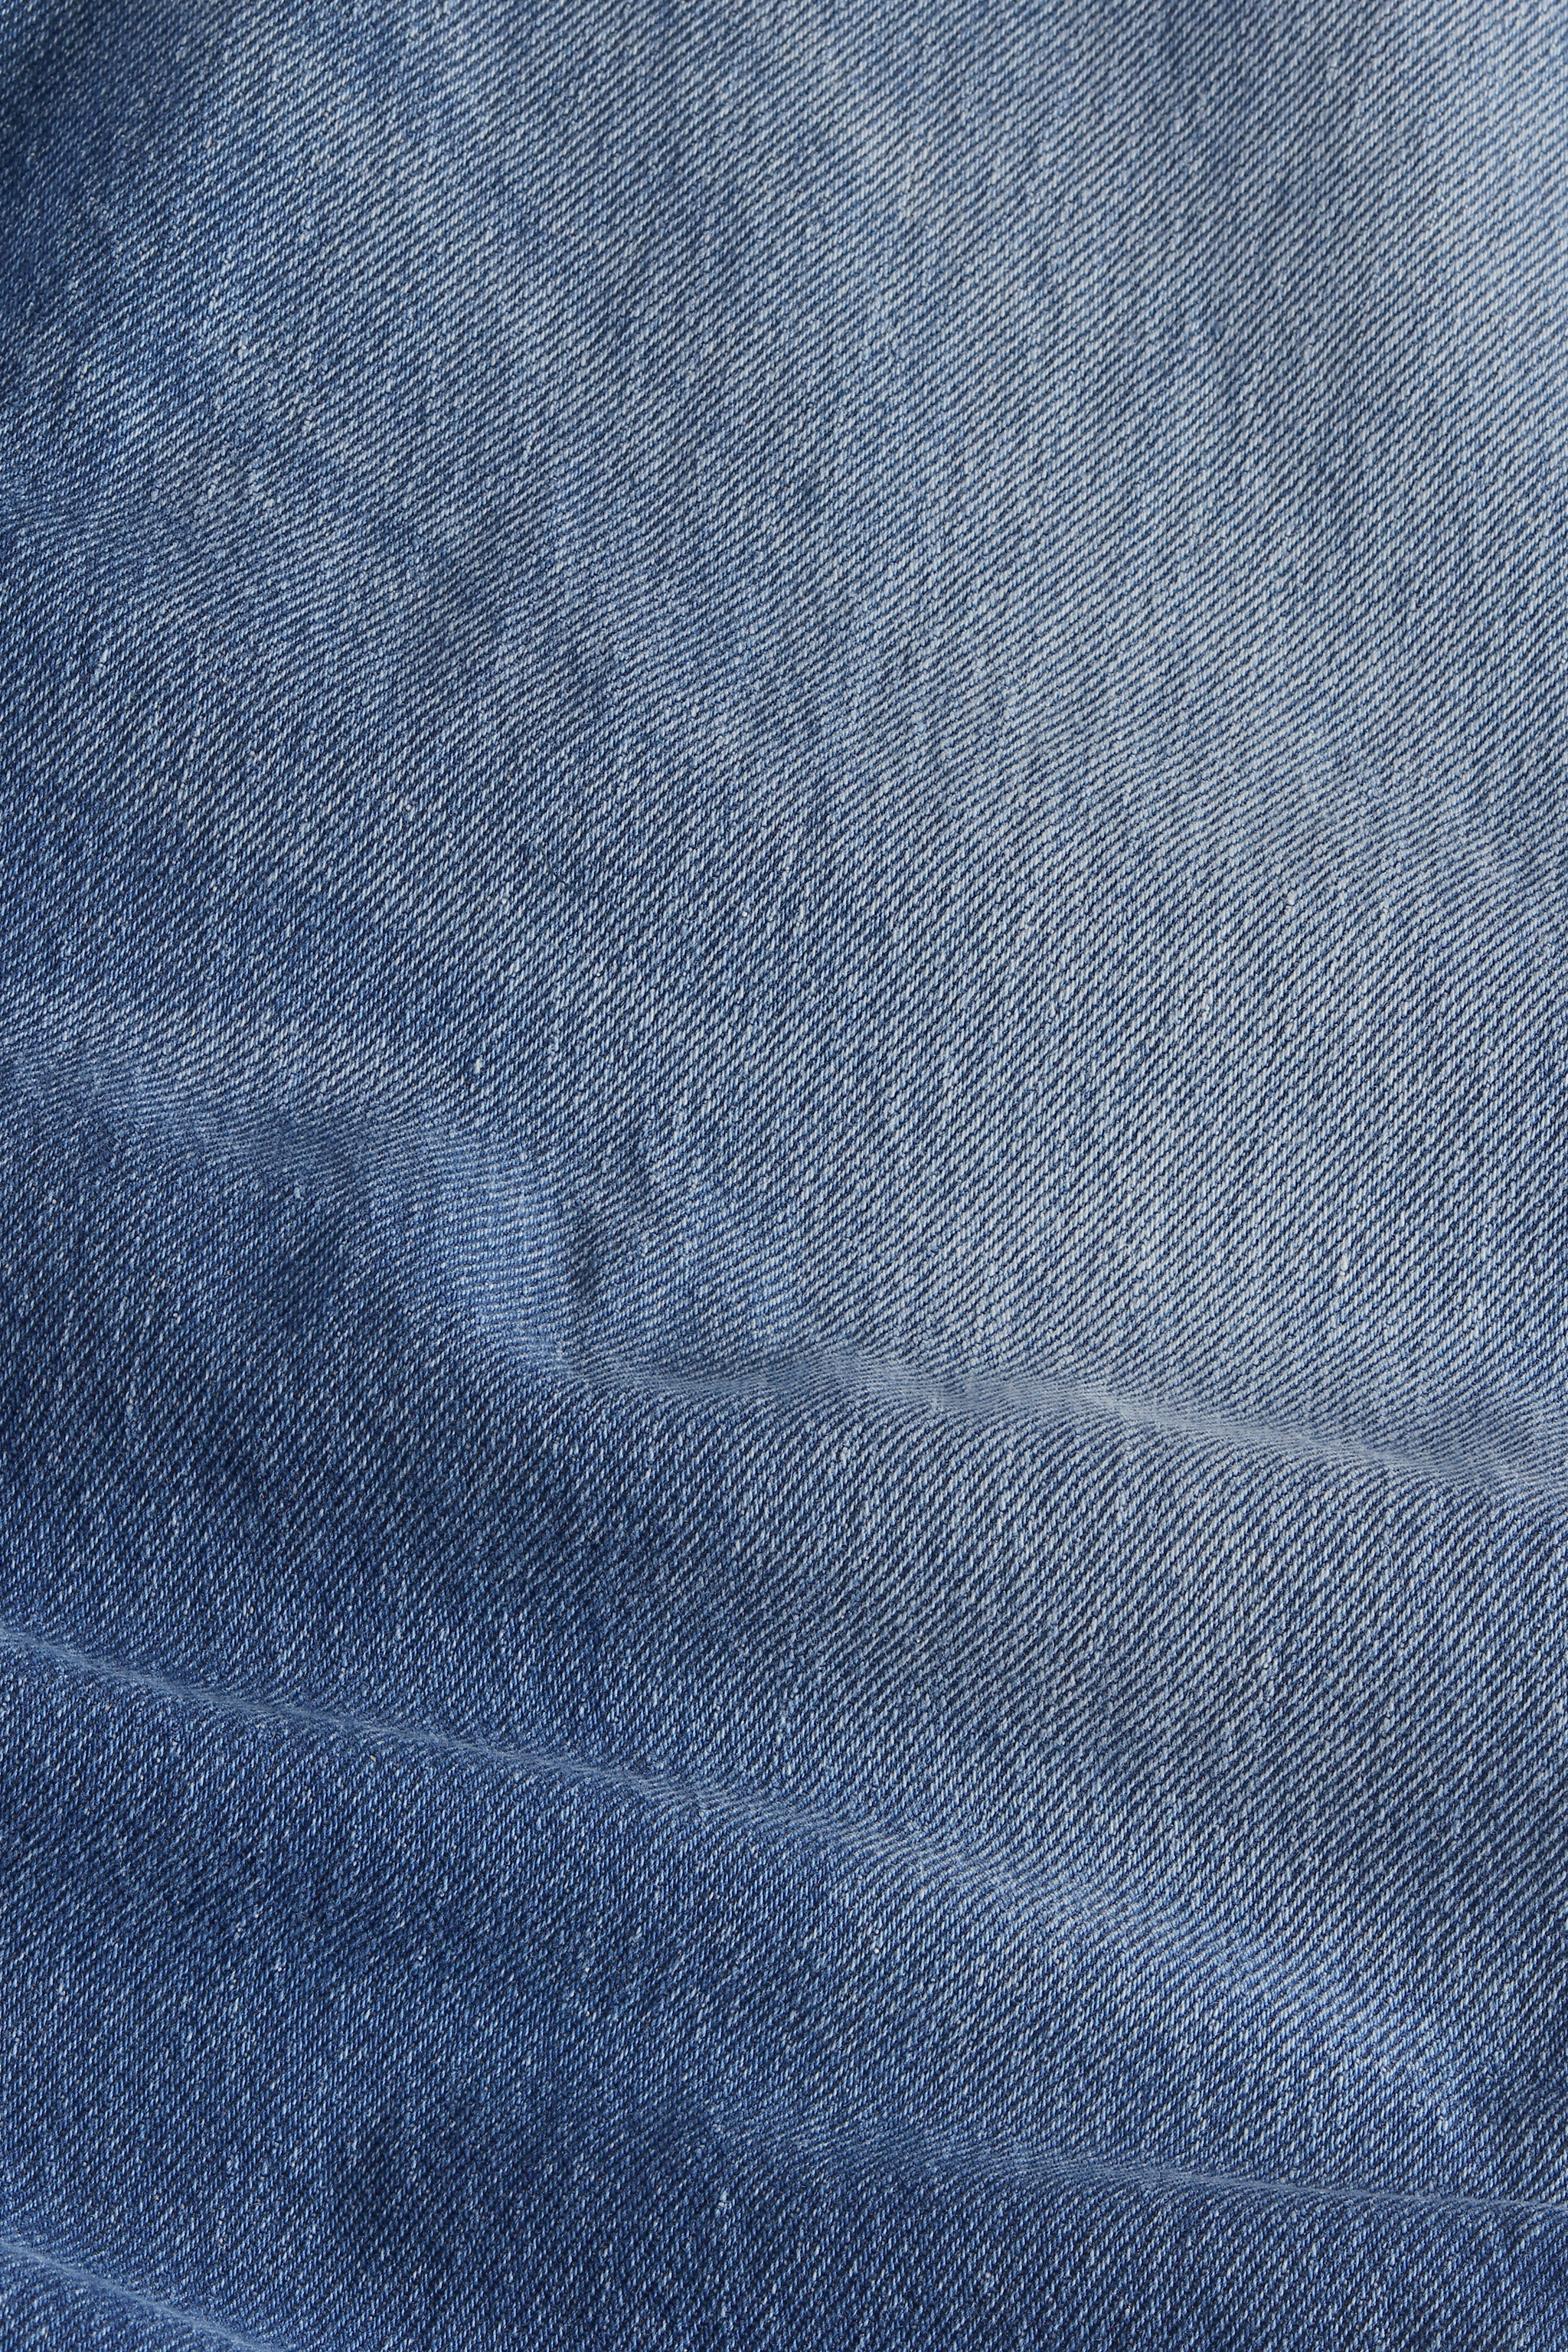 Frey 1854 men's jeans - Blue - Buy online at NN.07®